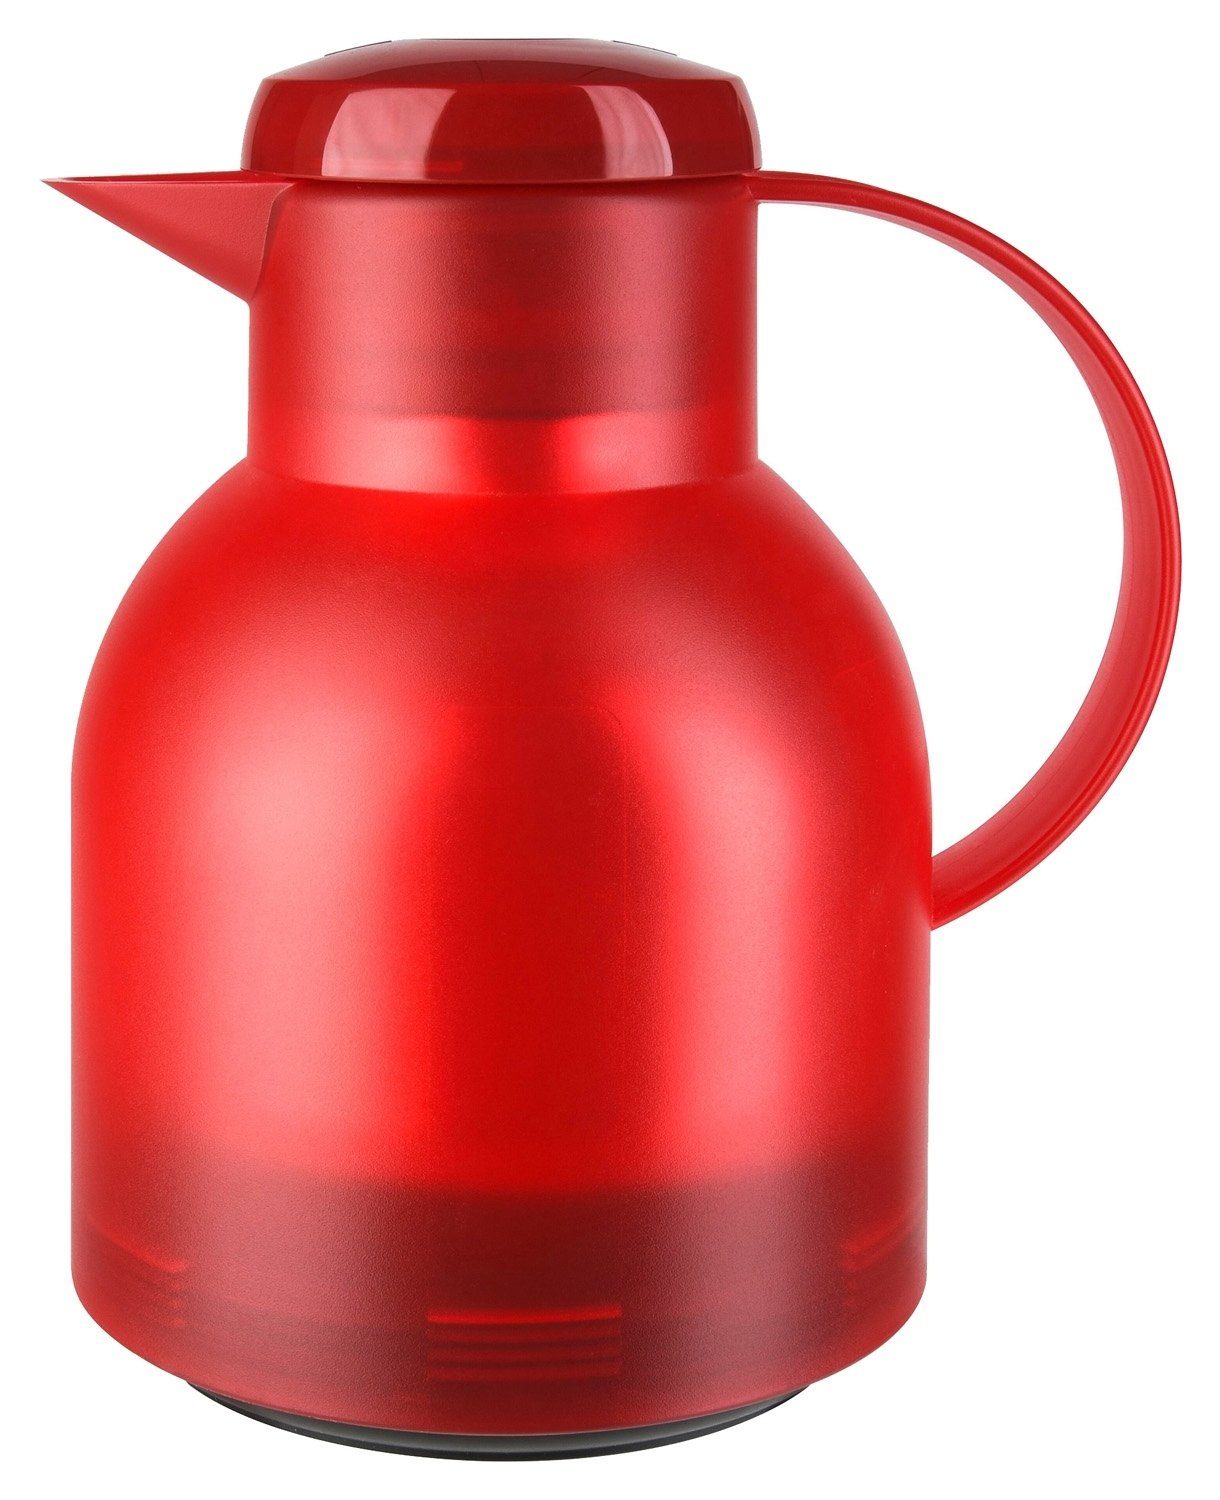 Emsa Isolierkanne SAMBA, Iso-Kanne, Rot, 1 Liter, Auslaufsicher Rot Transluzent